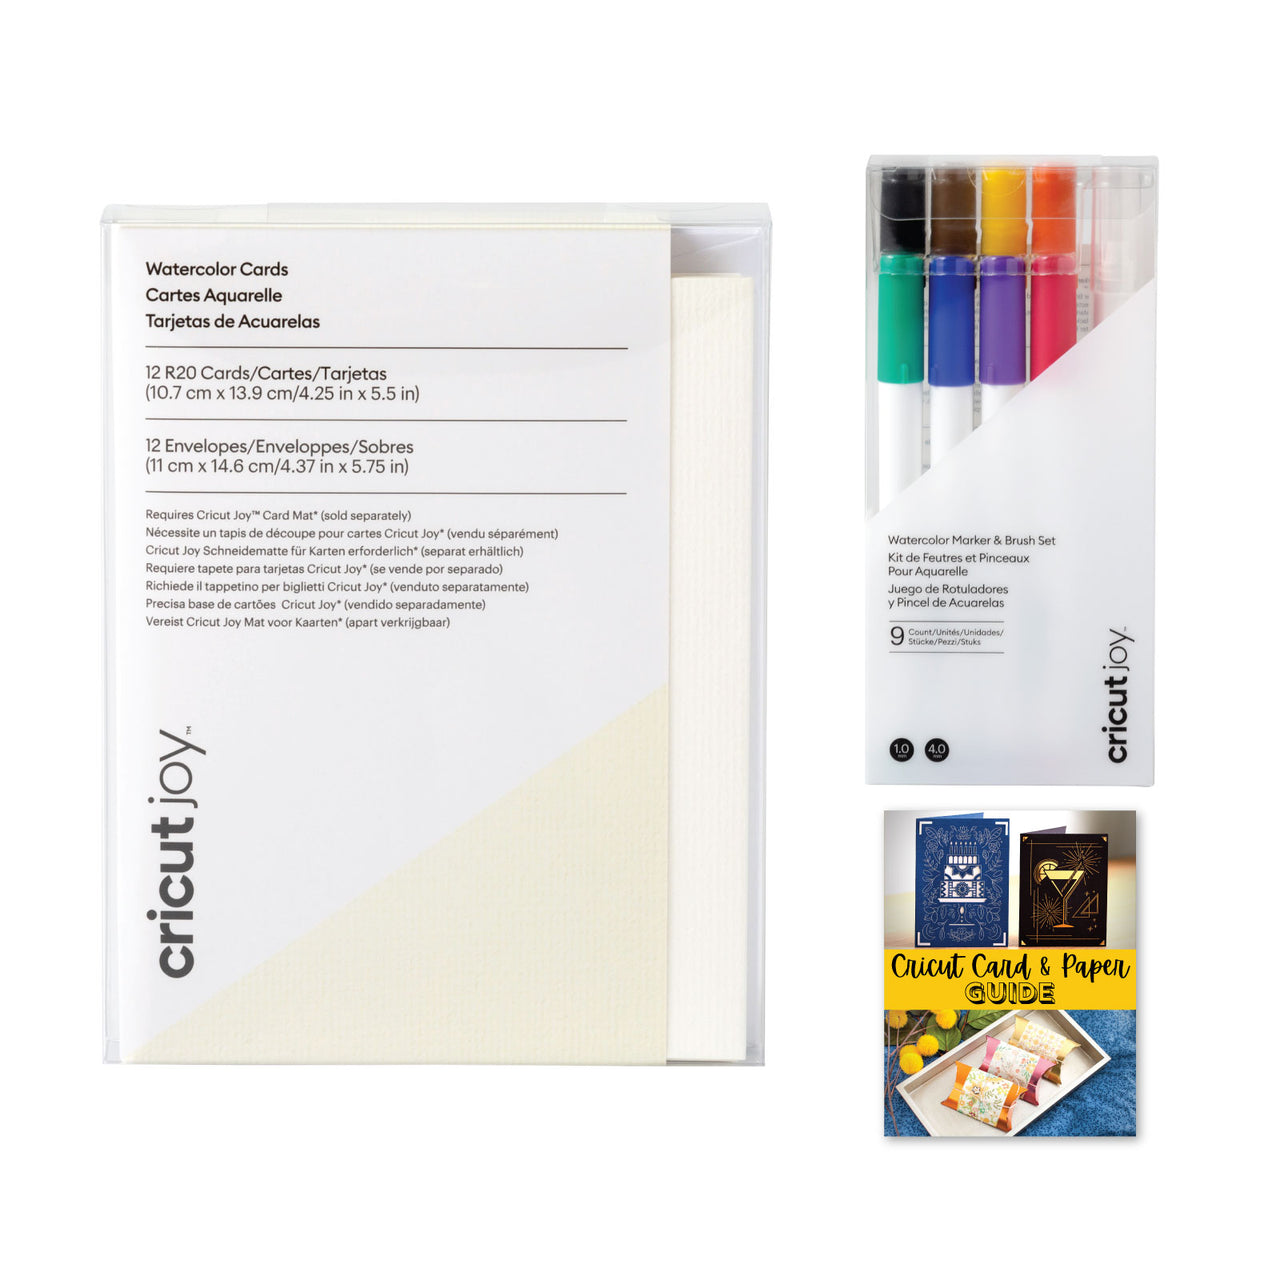 Cricut Joy Glitter Gel Pens 0.8 mm, Rainbow Colors